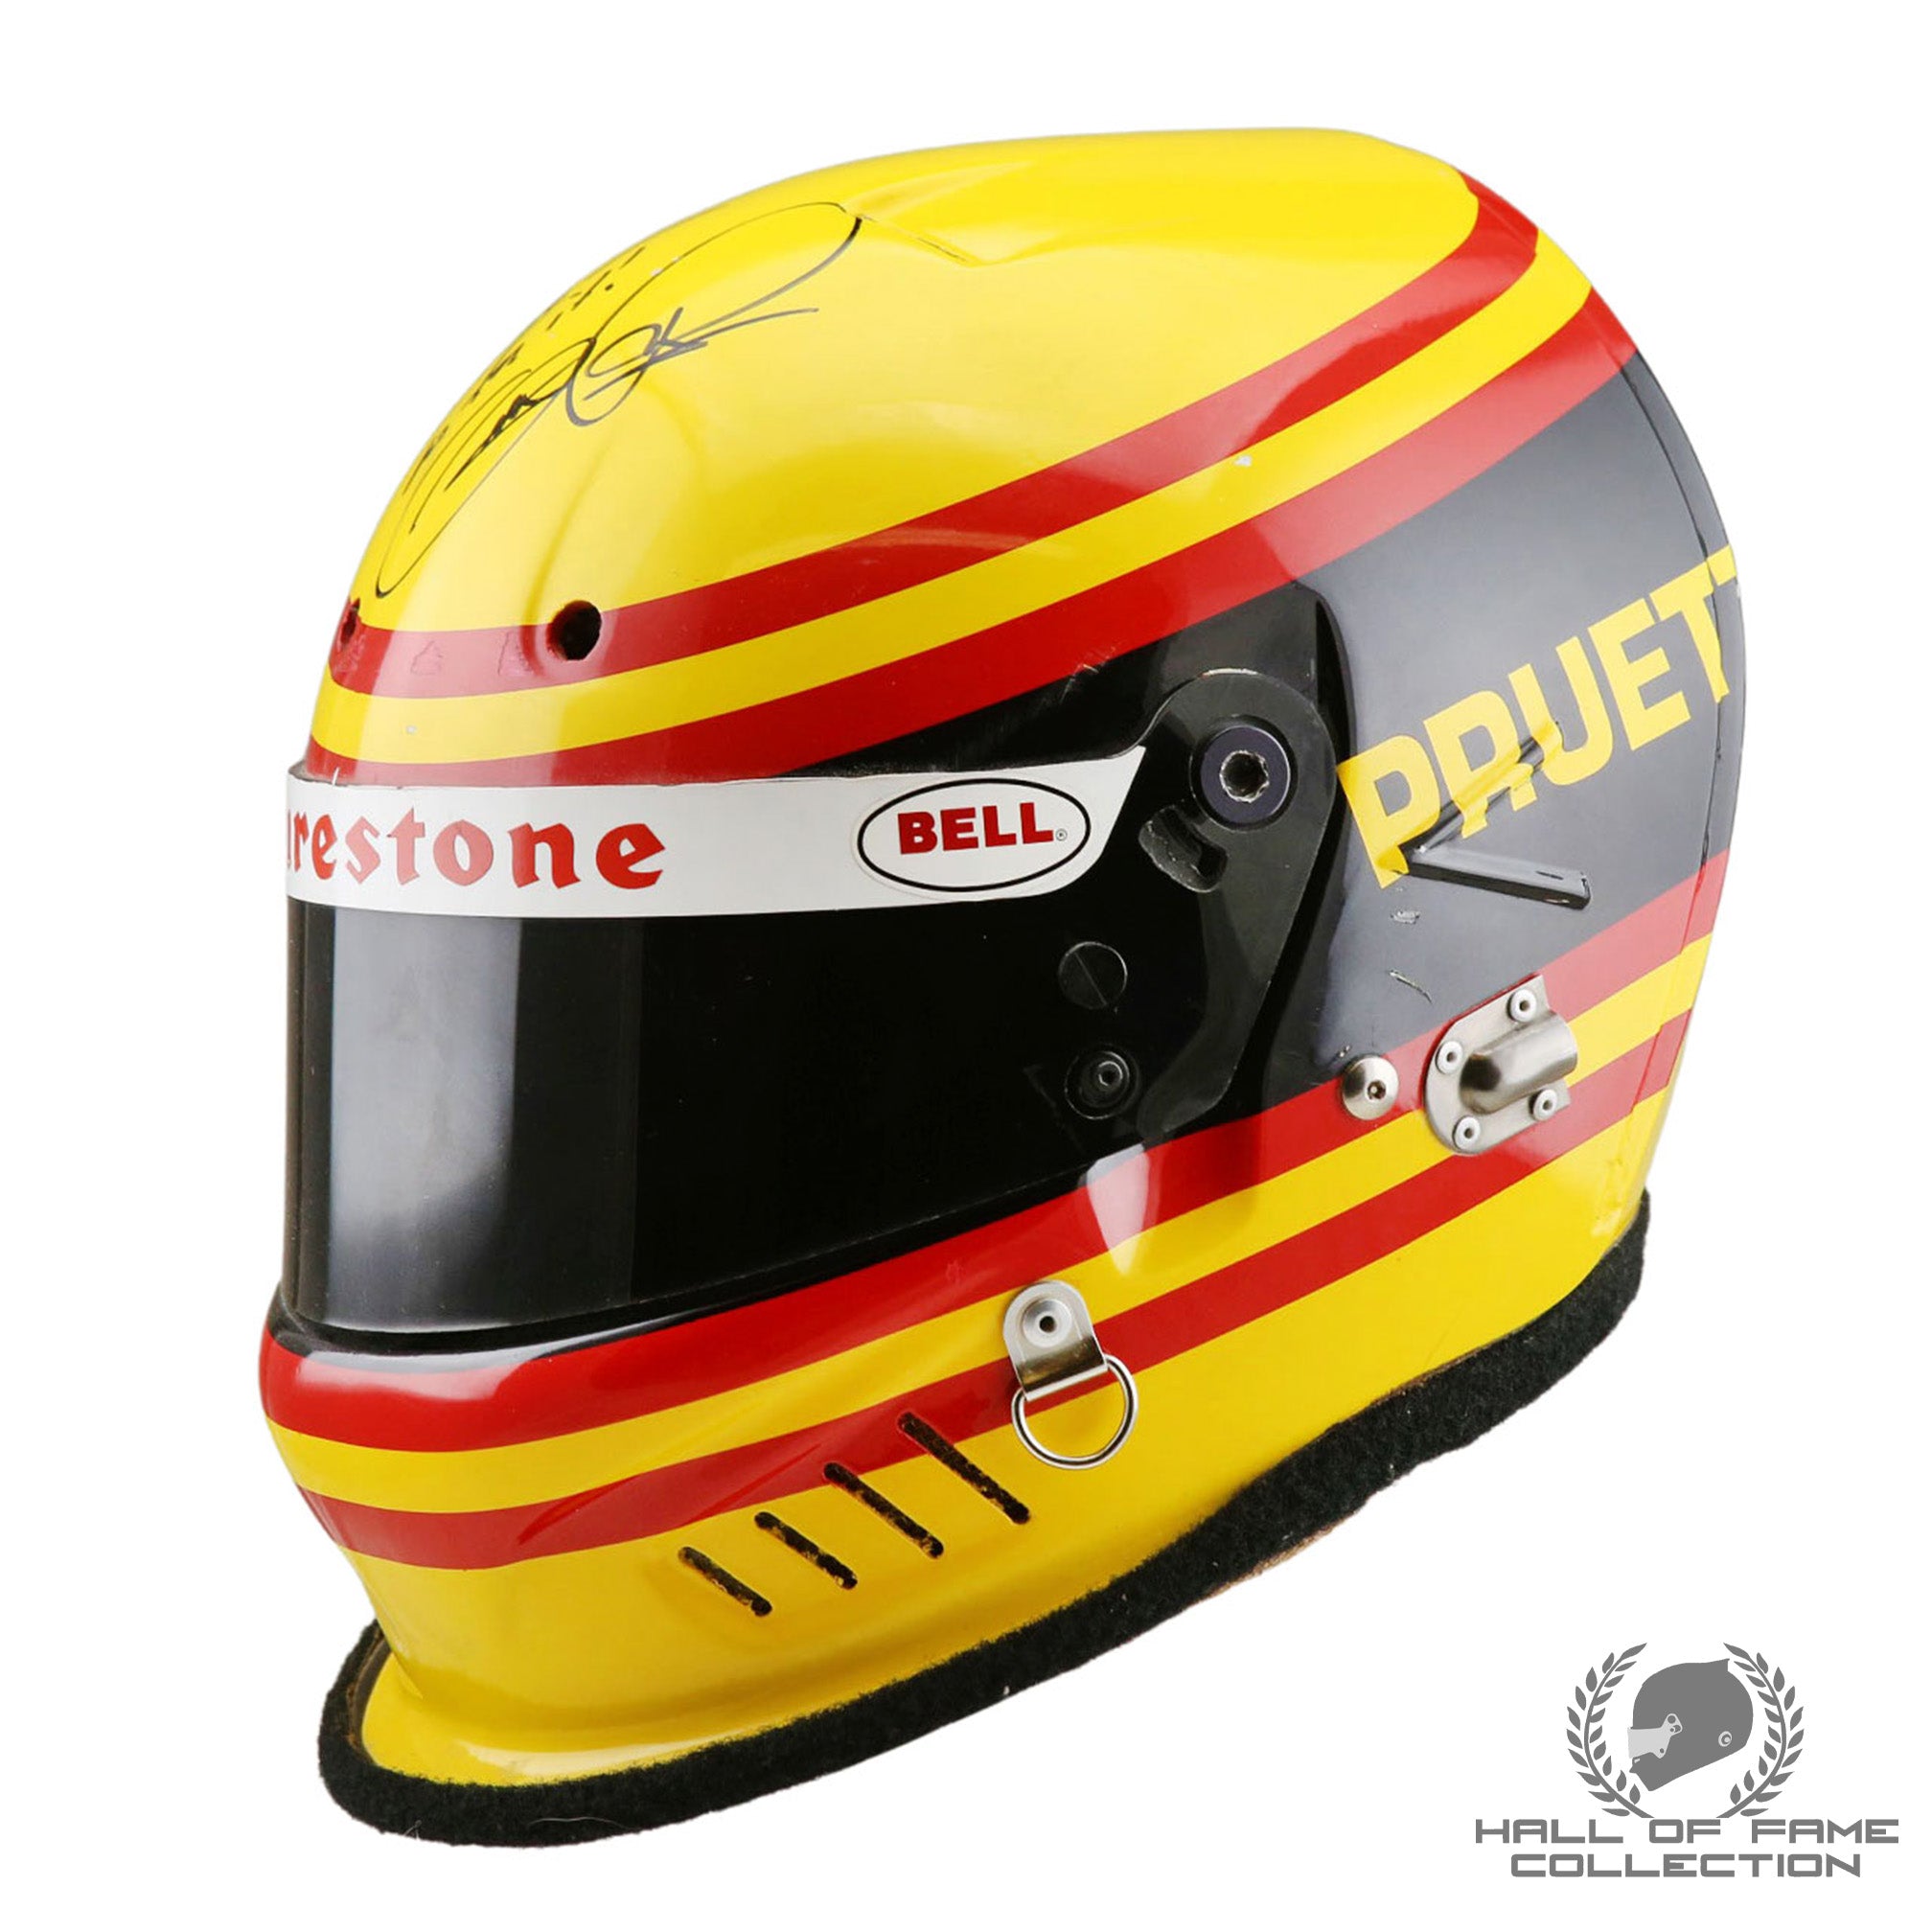 1995 Scott Pruett Signed Original Bell Feuling Patrick Racing IndyCar Helmet